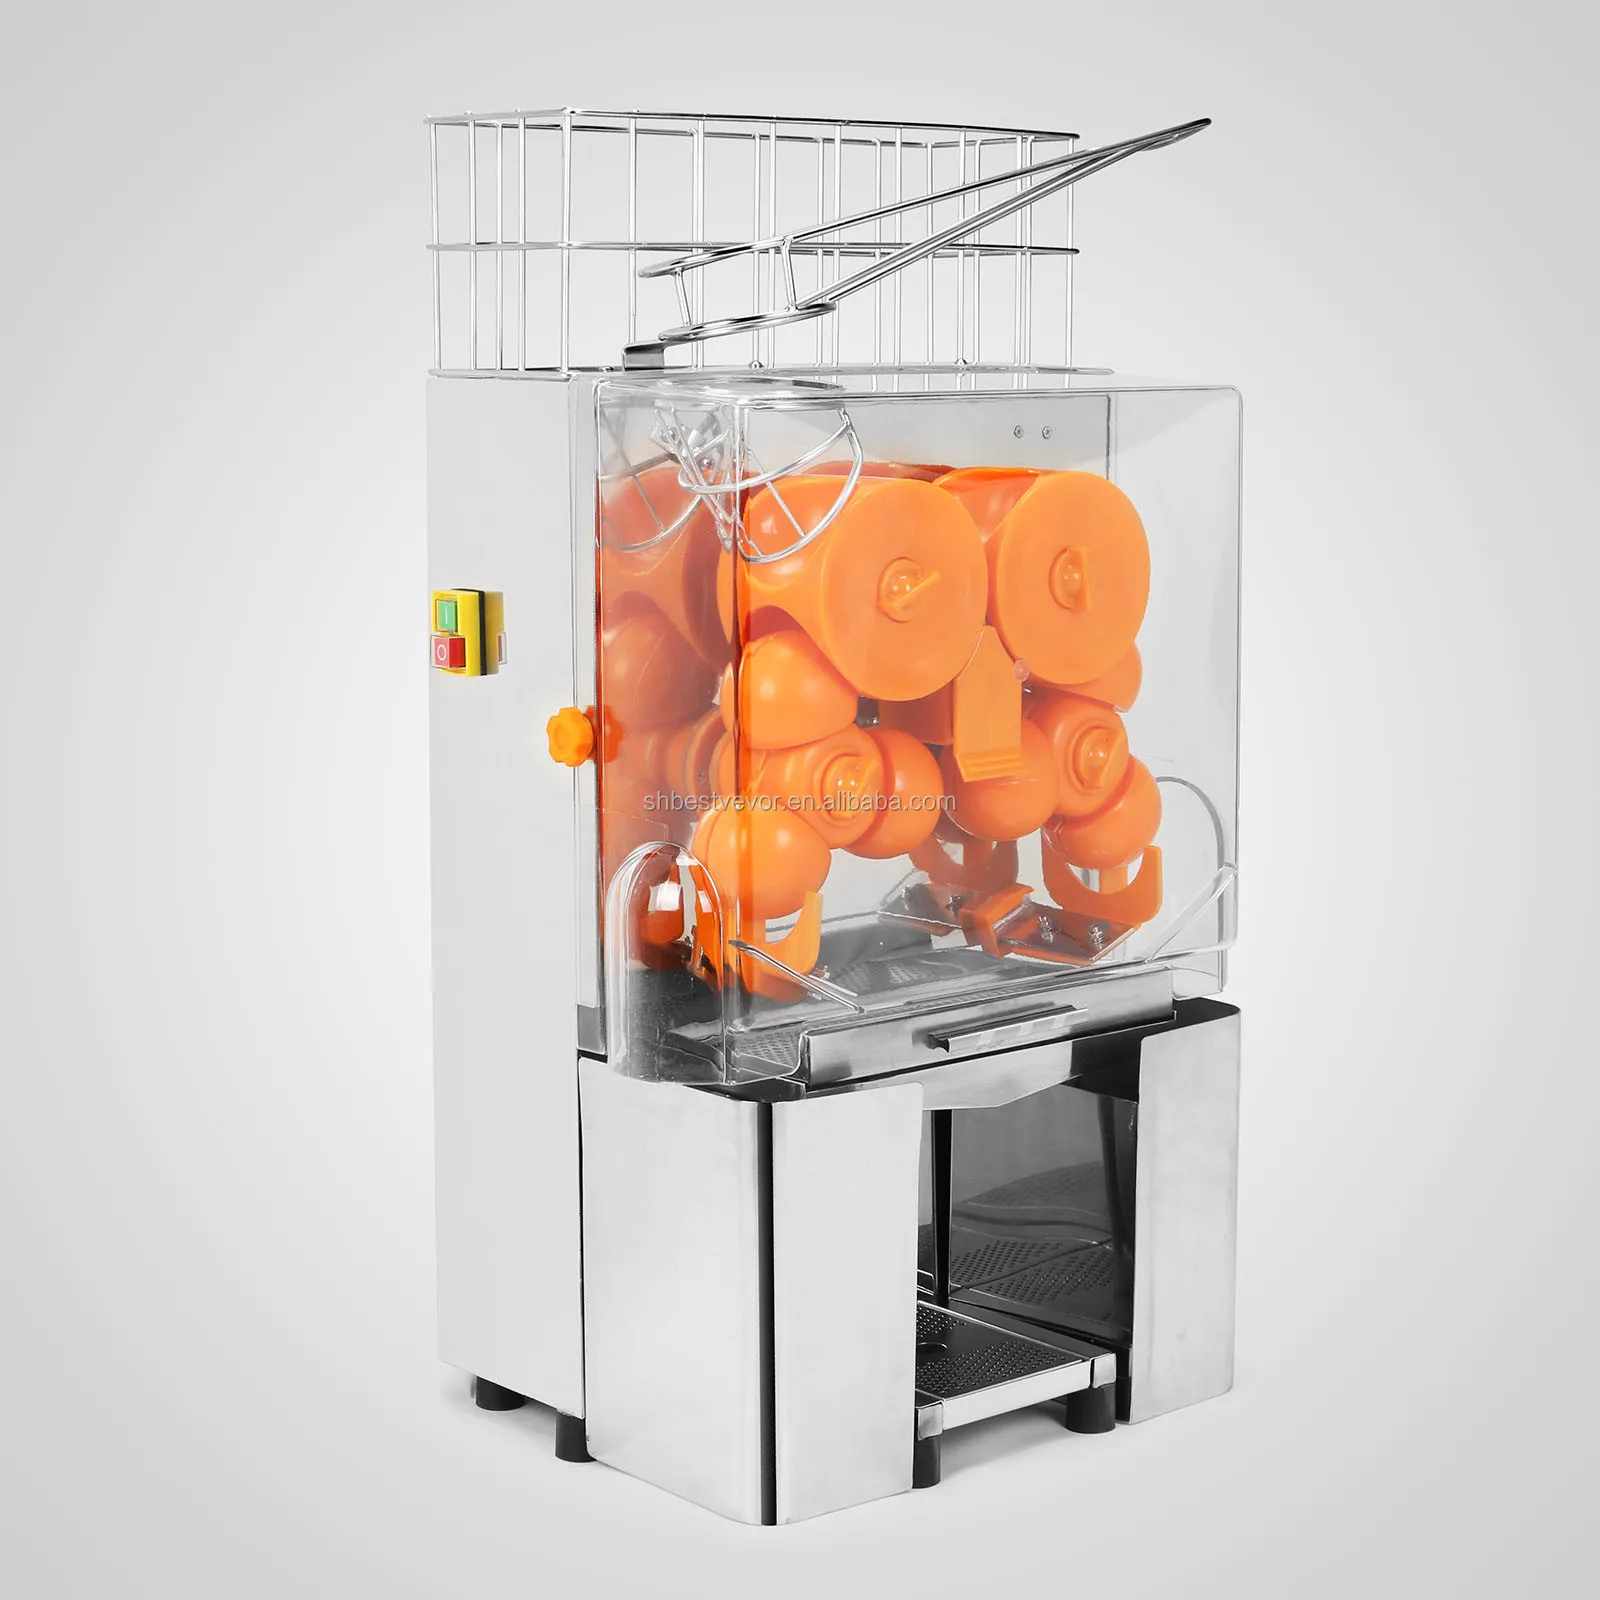 VEVOR Commercial House Electric Orange Squeezer Juice Fruit Maker Juicer Press Machine